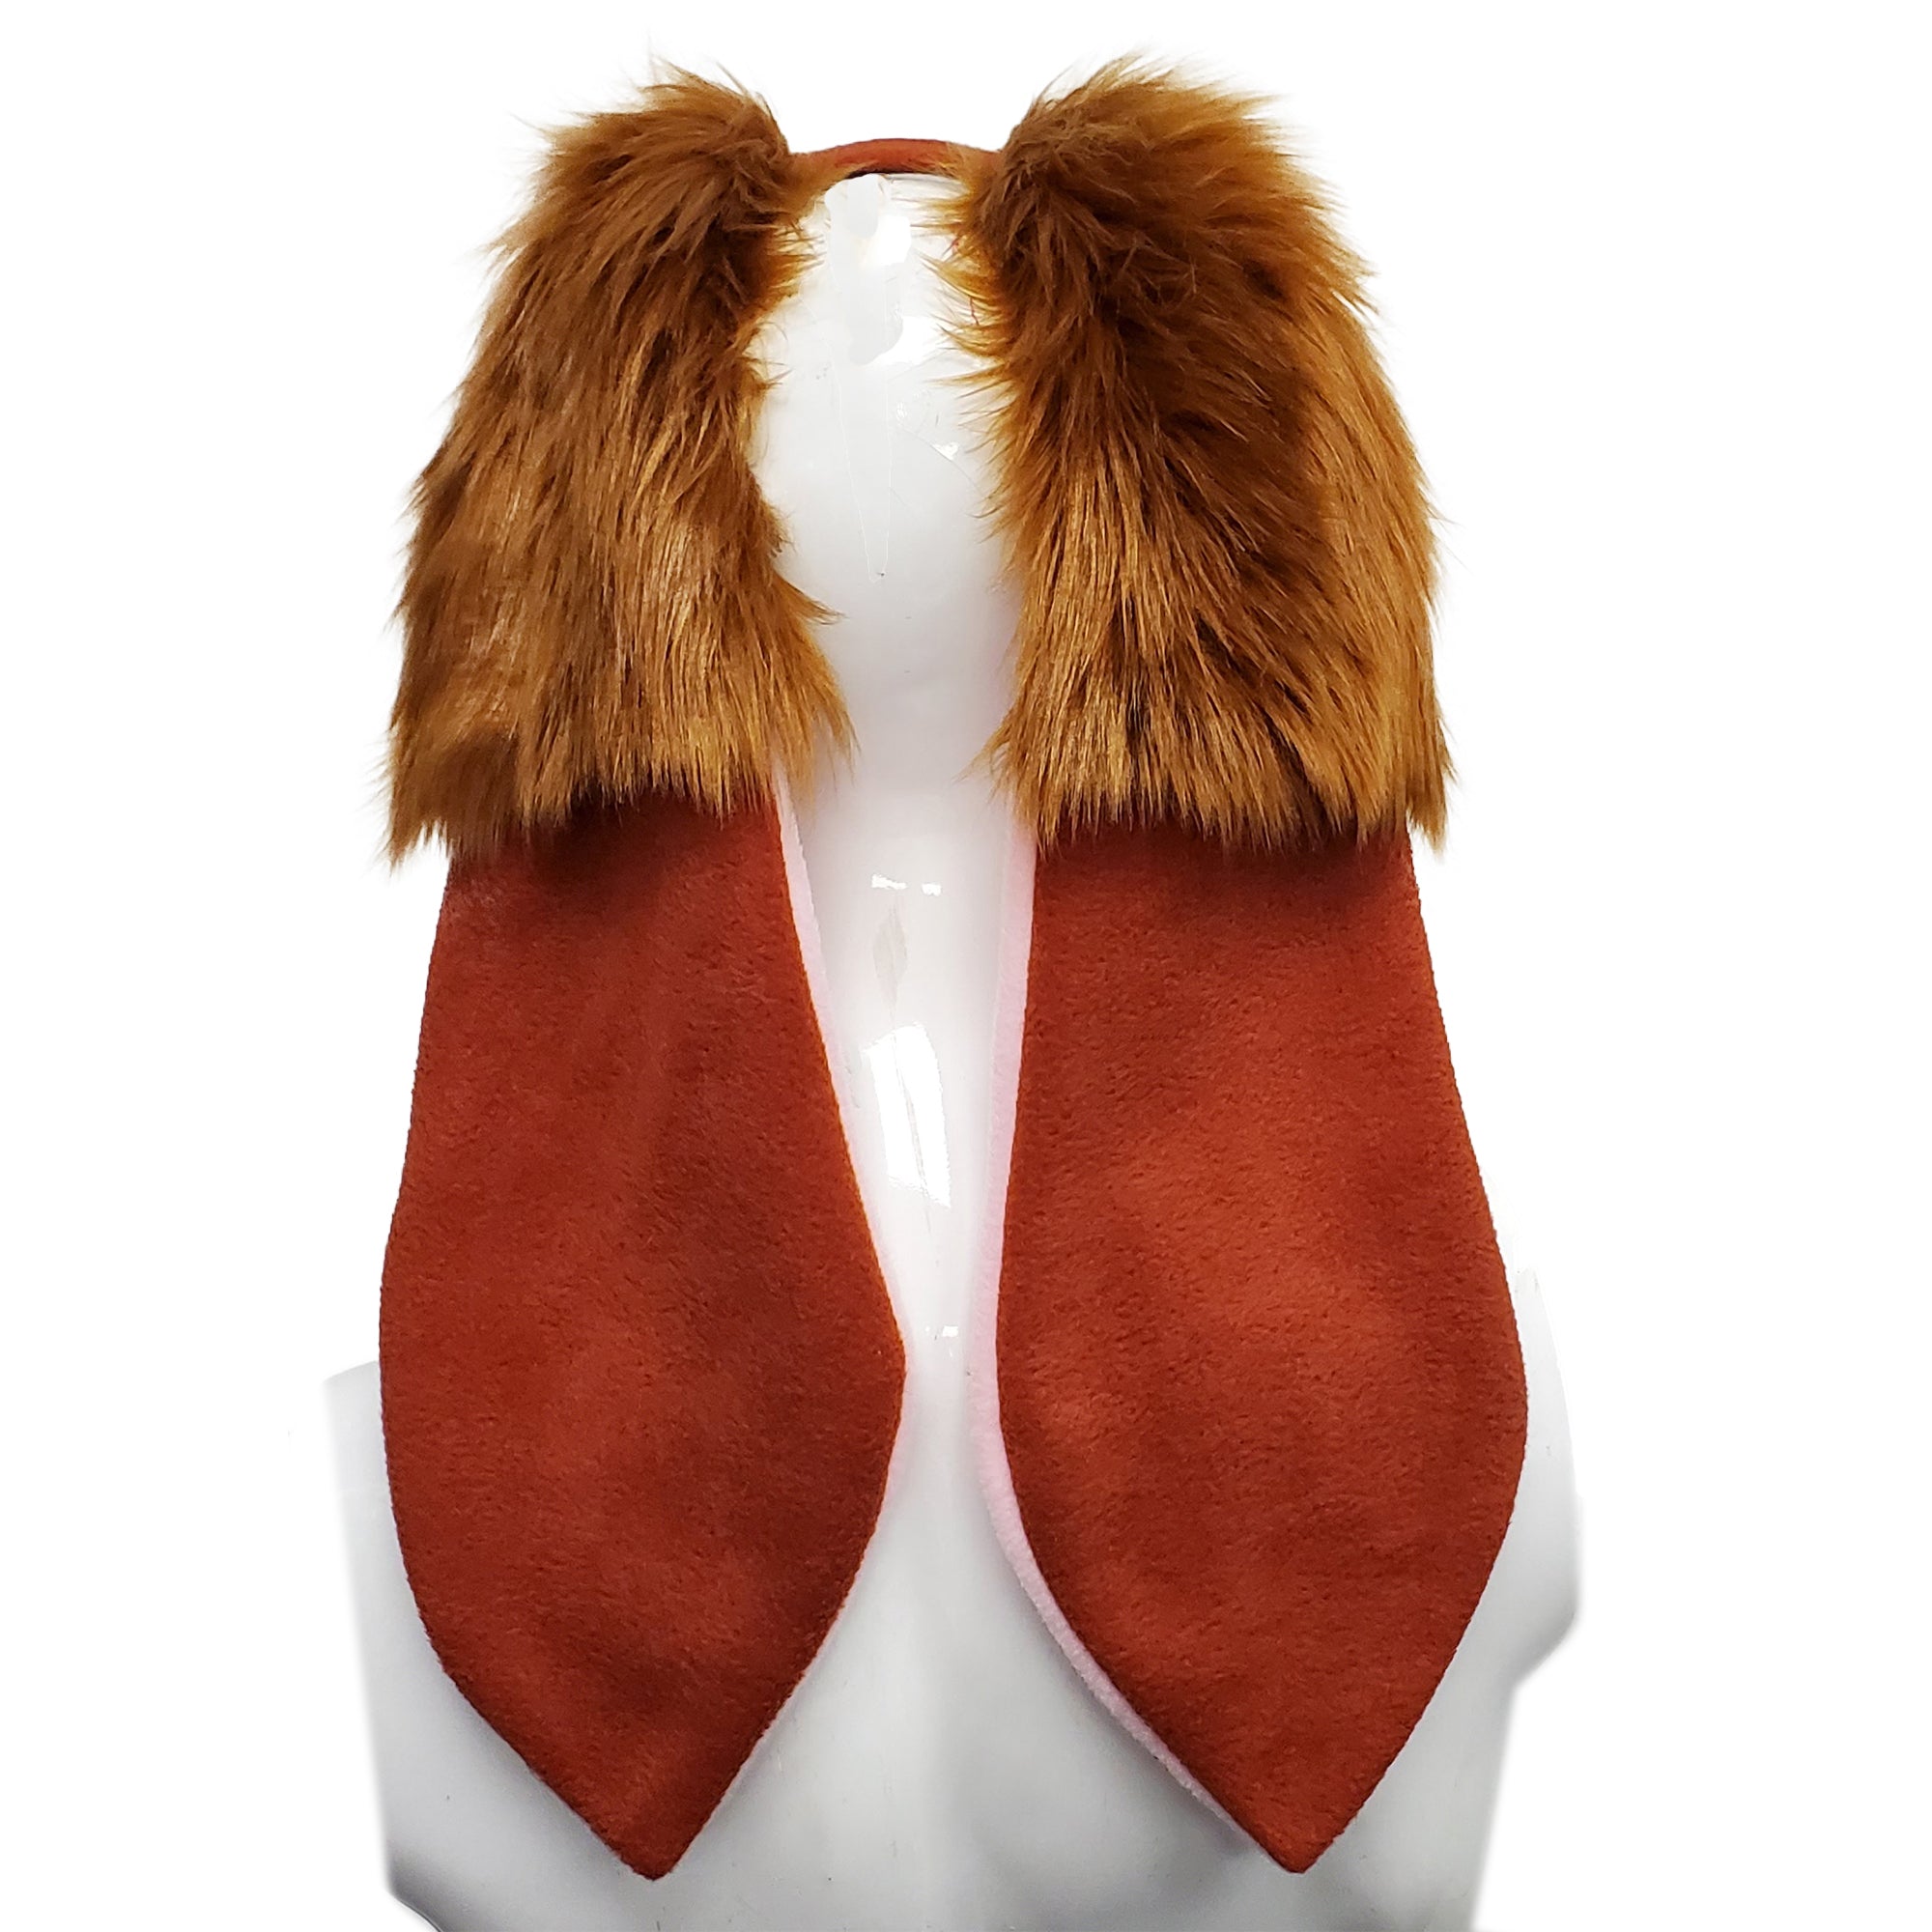 Pawstar Classic Floppy Bunny Rabbit Headband easter bugs judy hopps furry fluffy partial fursuit halloween costume or cosplay accessory